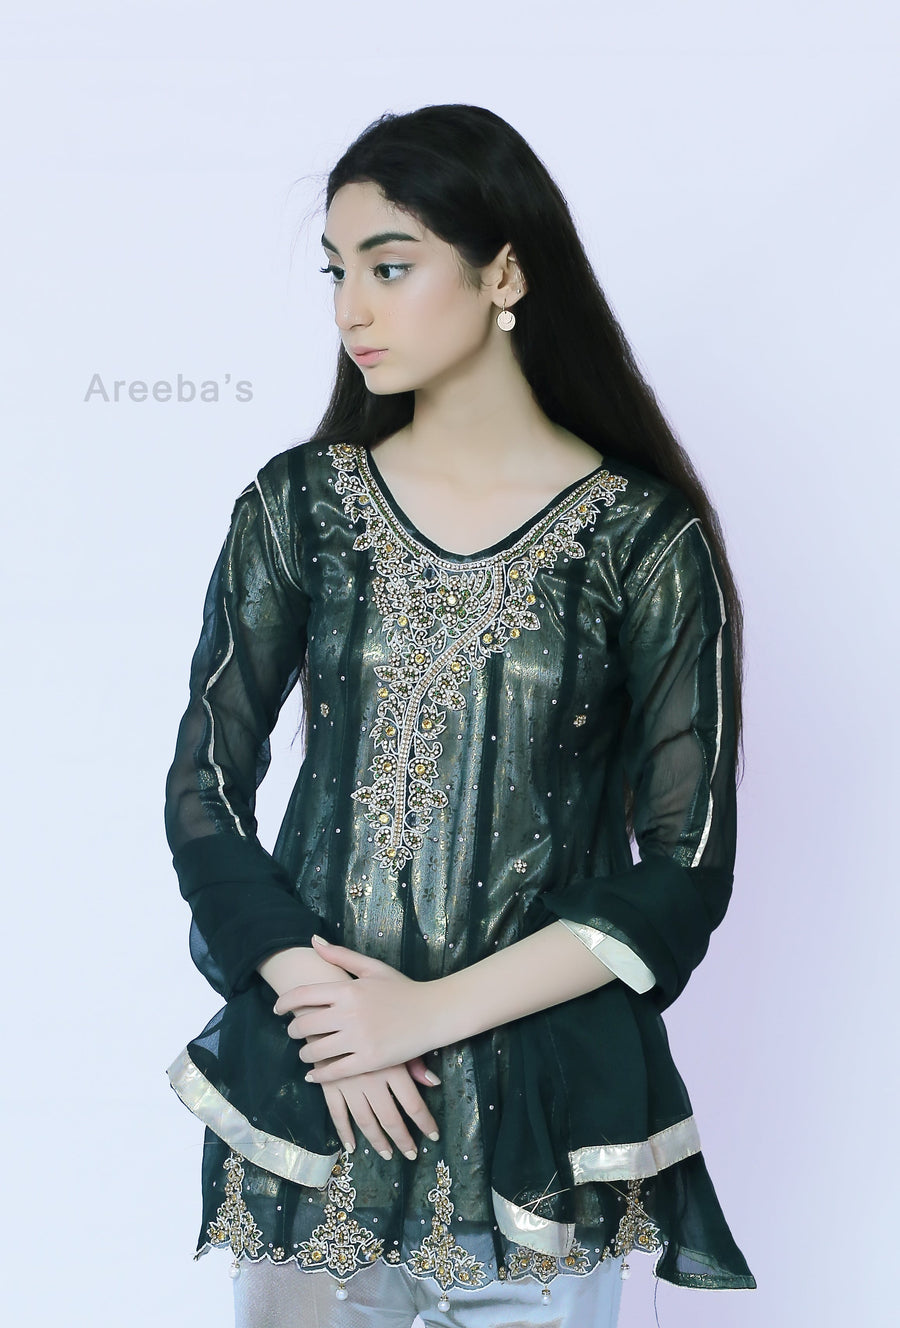 Girls BC42- Areeba's Couture